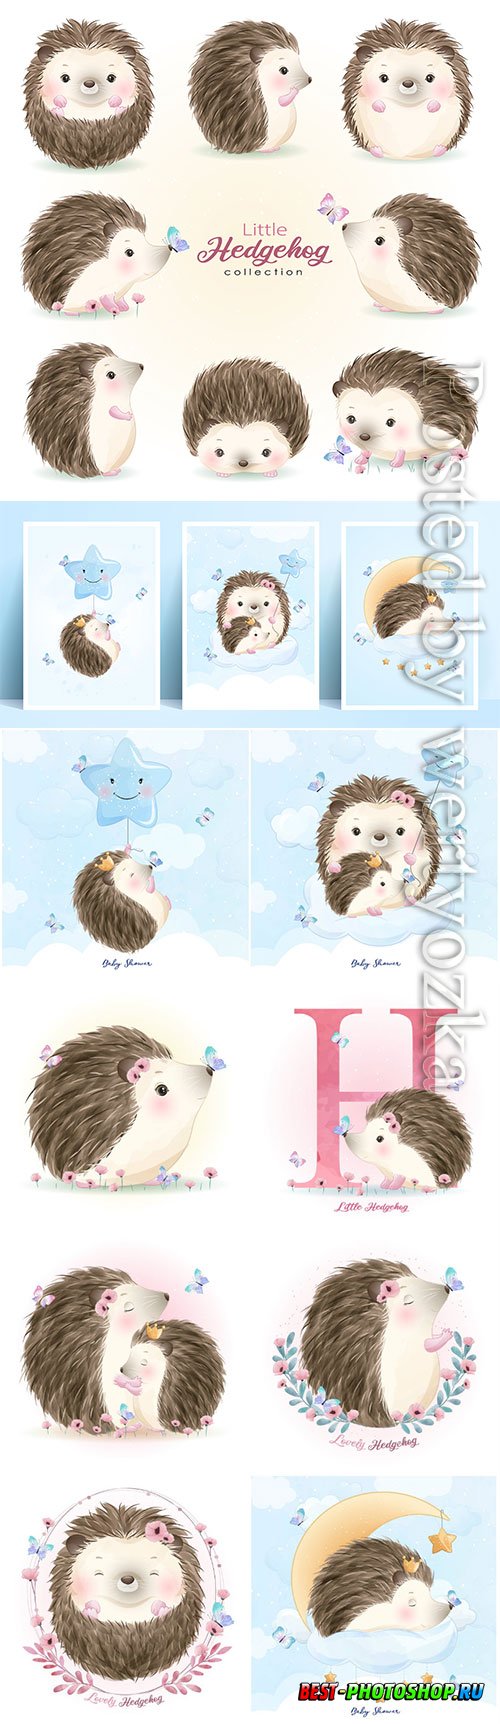 Cute doodle hedgehog set with watercolor vector illustration